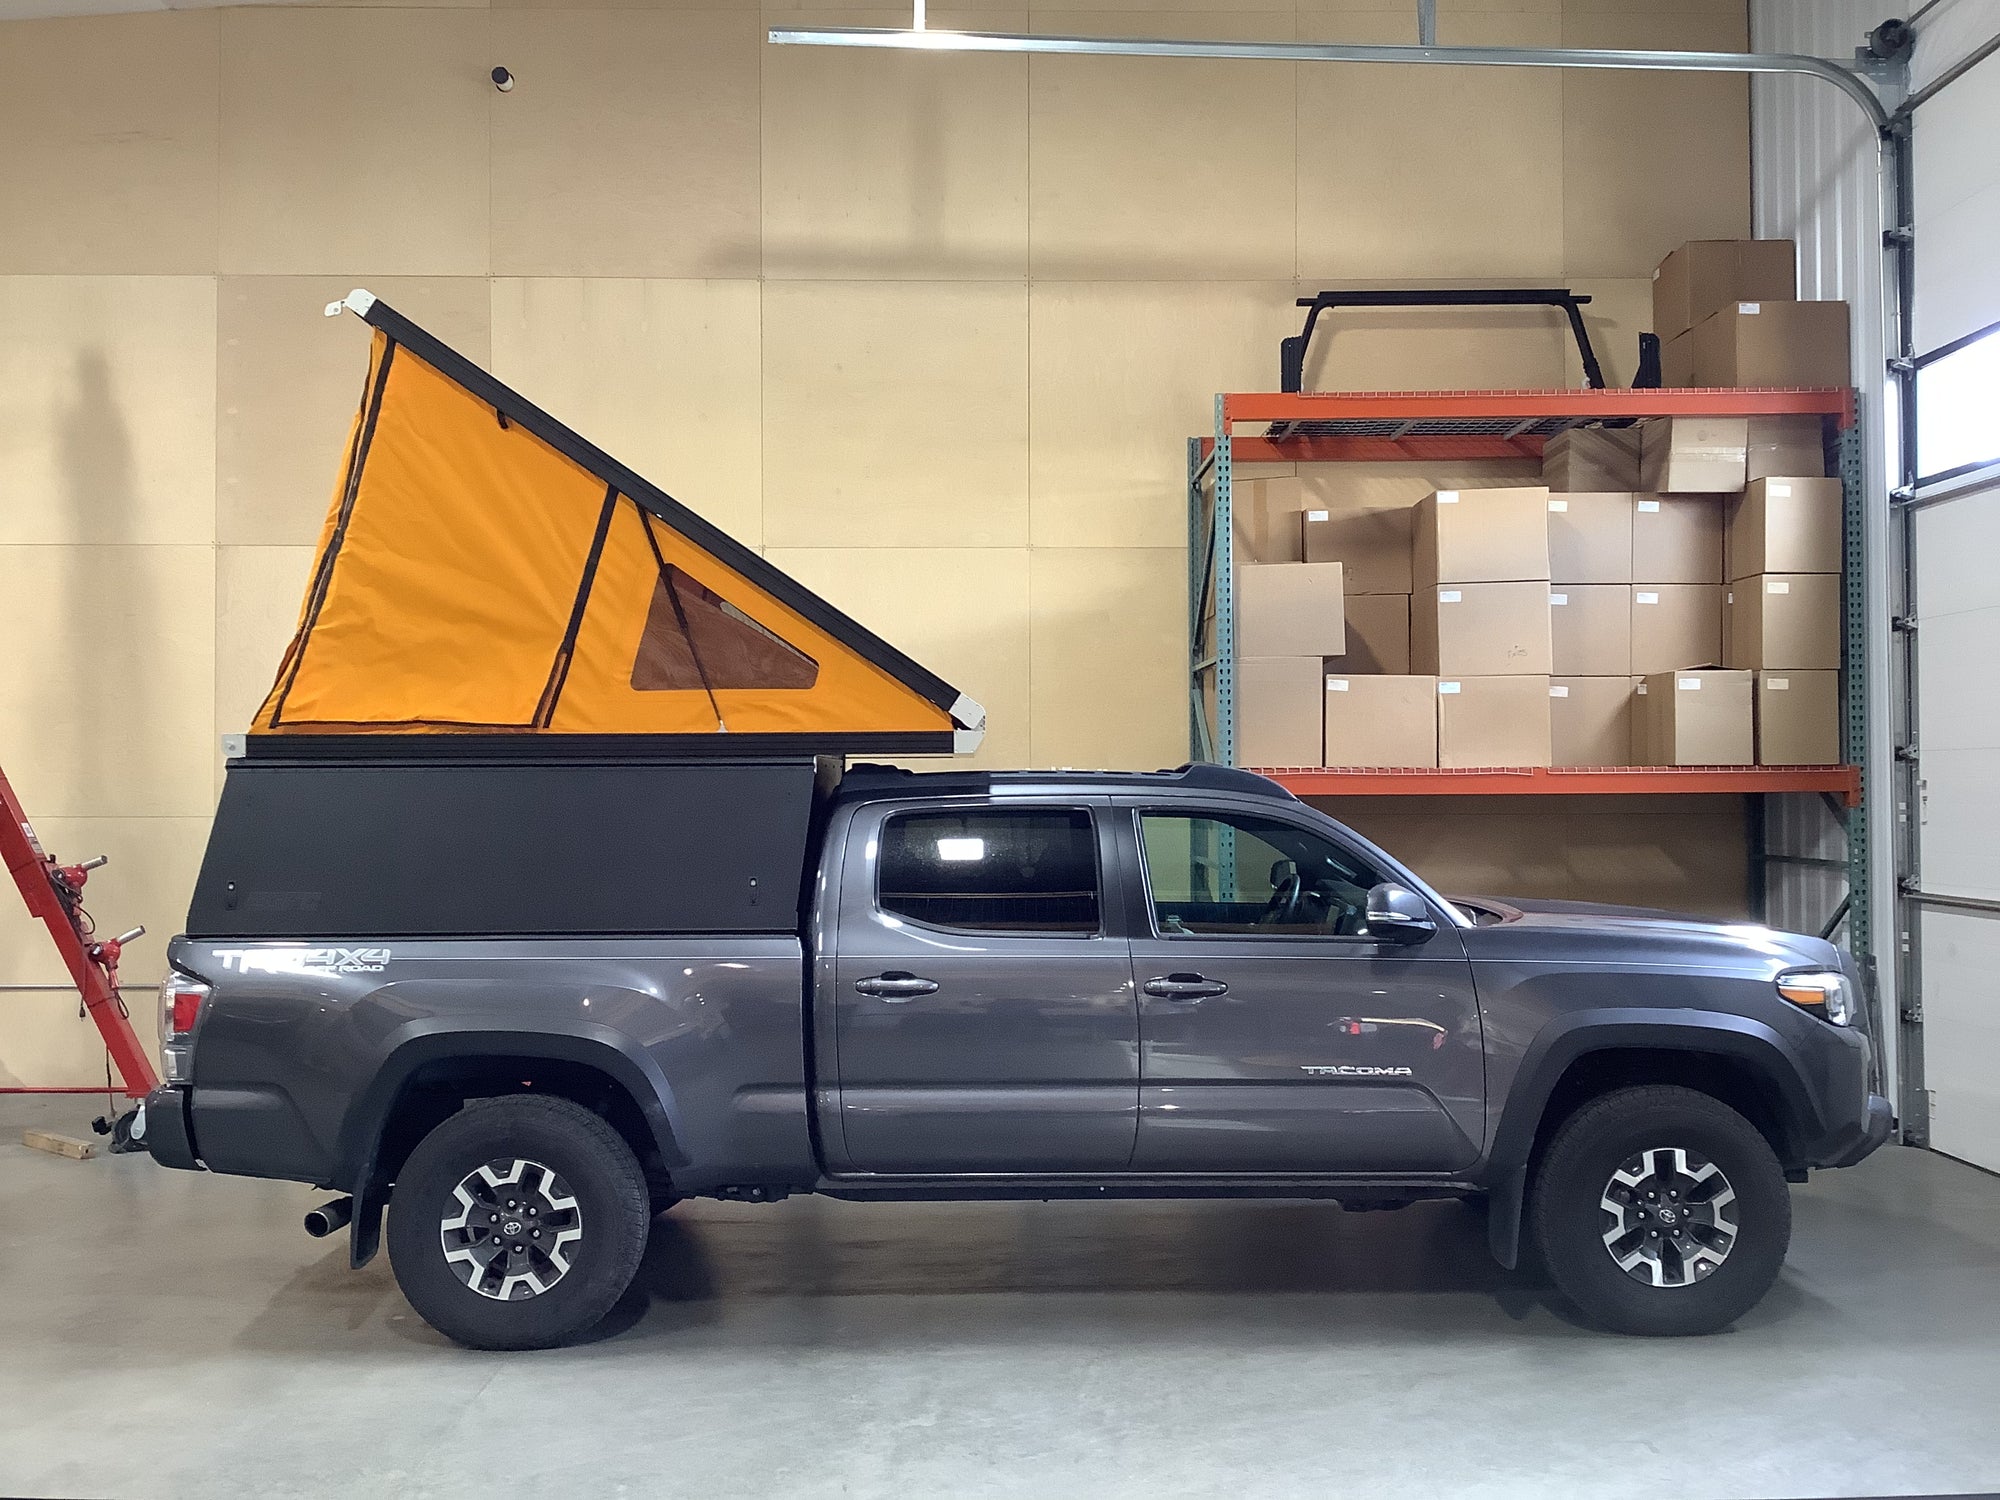 2021 Toyota Tacoma Camper - Build #3992